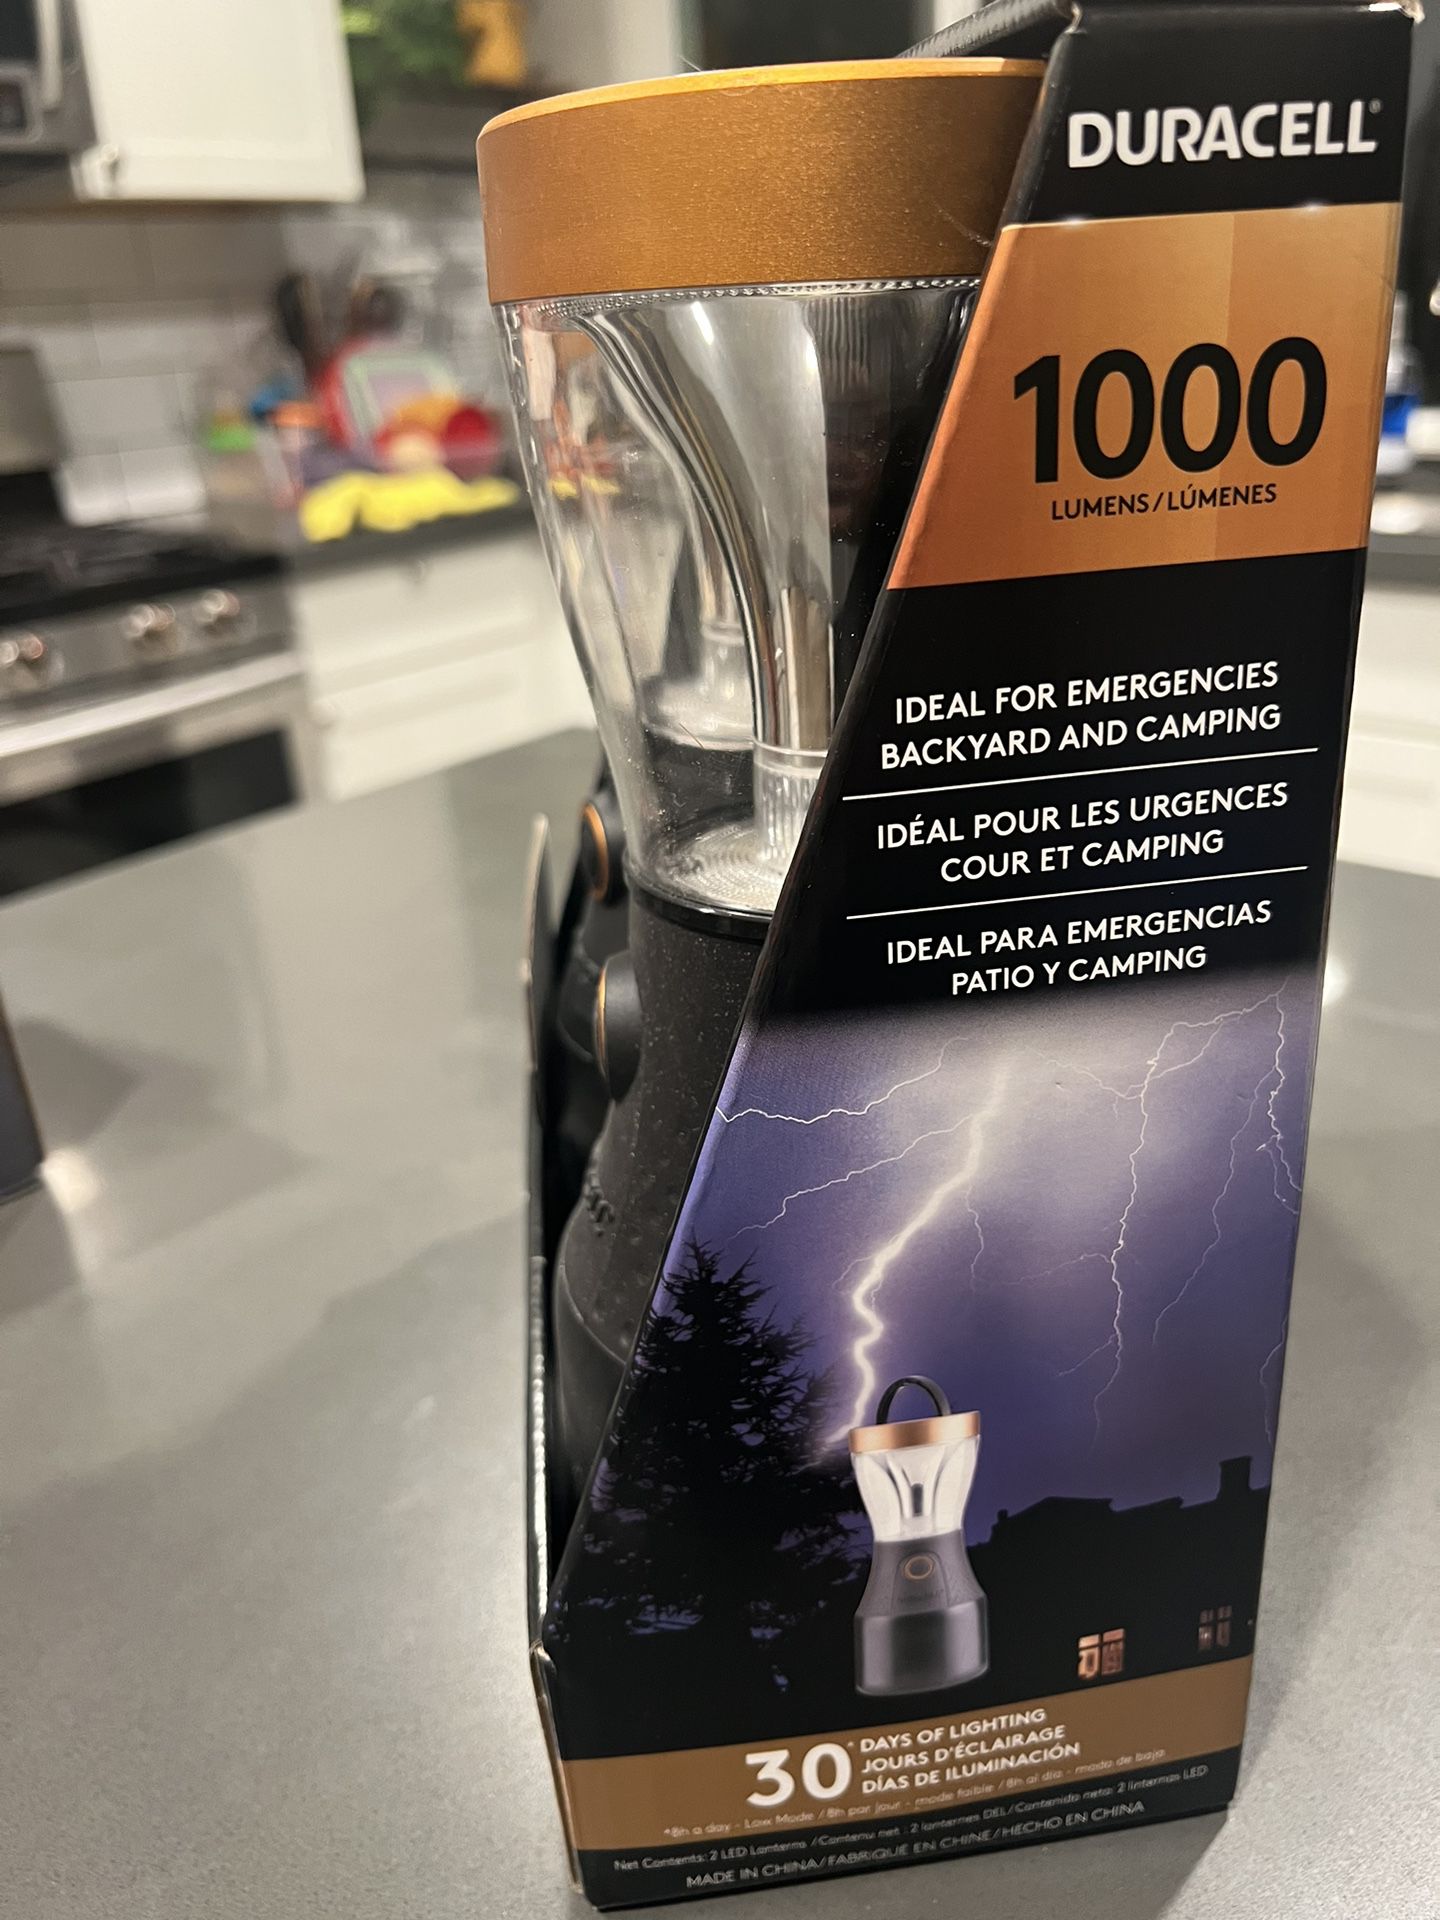 Duracell 1000 Lumen Lantern 2 pack for Sale in Pompano Beach, FL - OfferUp